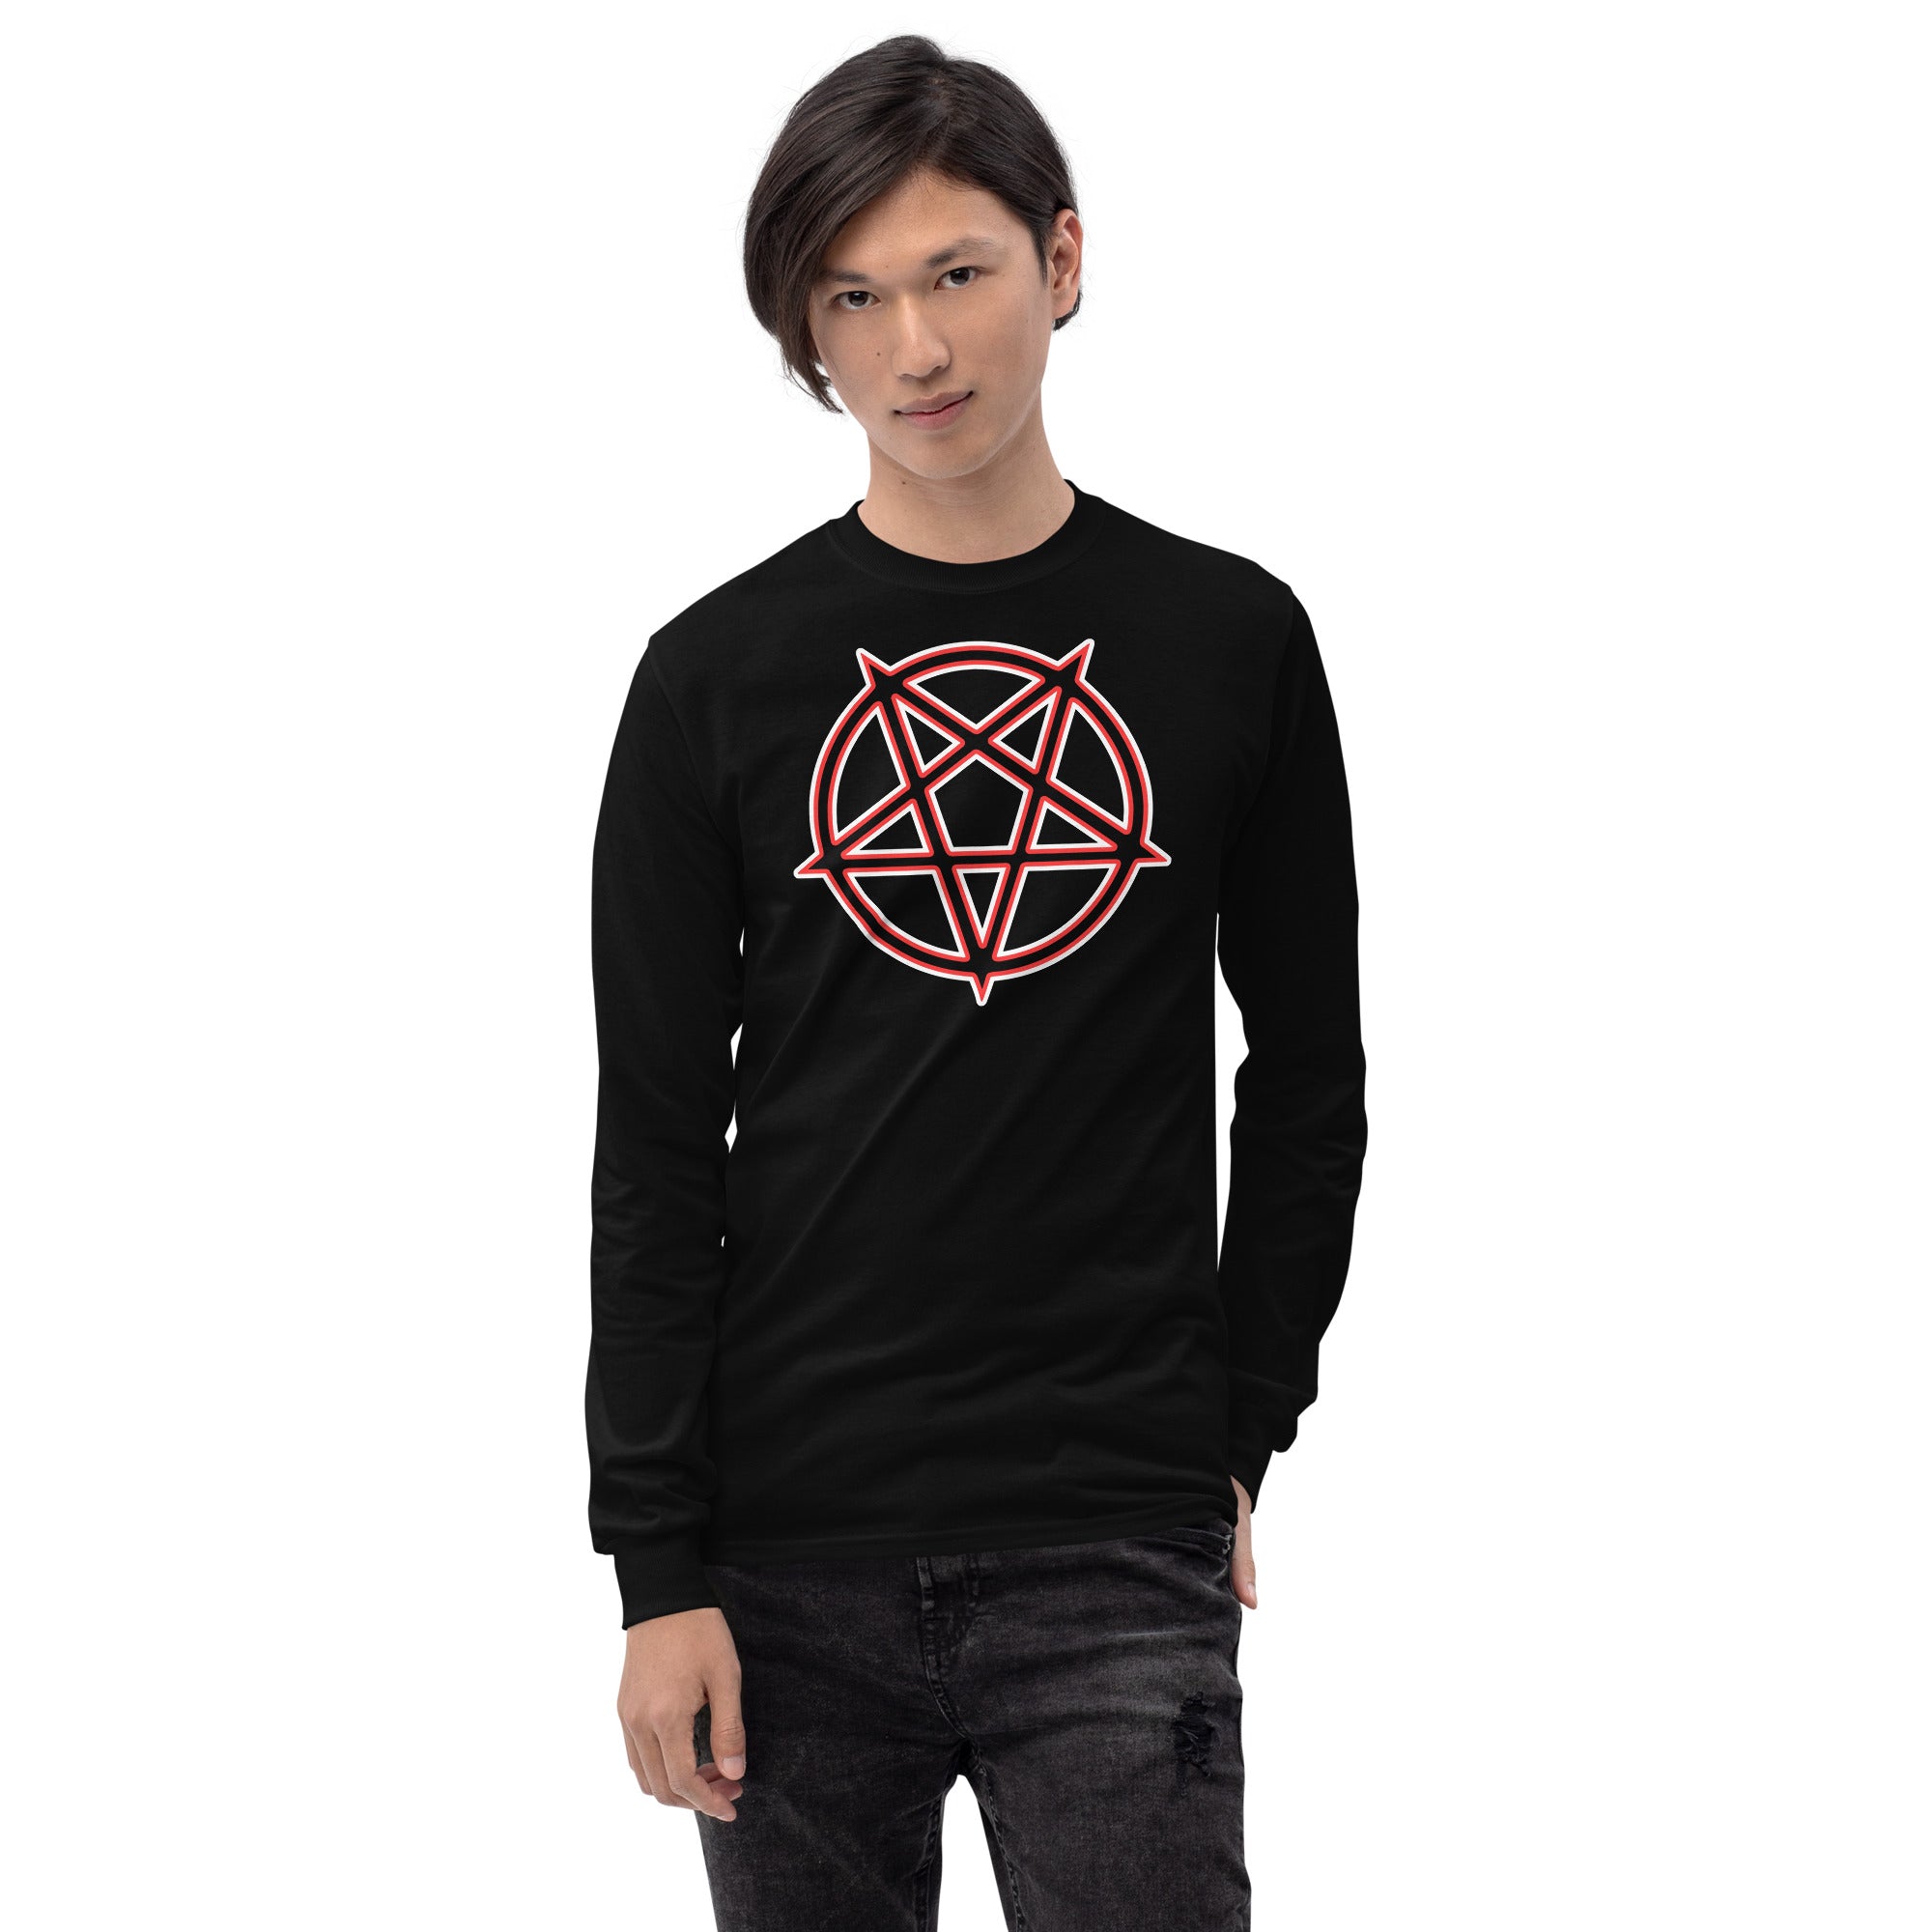 Satanic Occult Symbol The Inverted Pentagram Long Sleeve Shirt